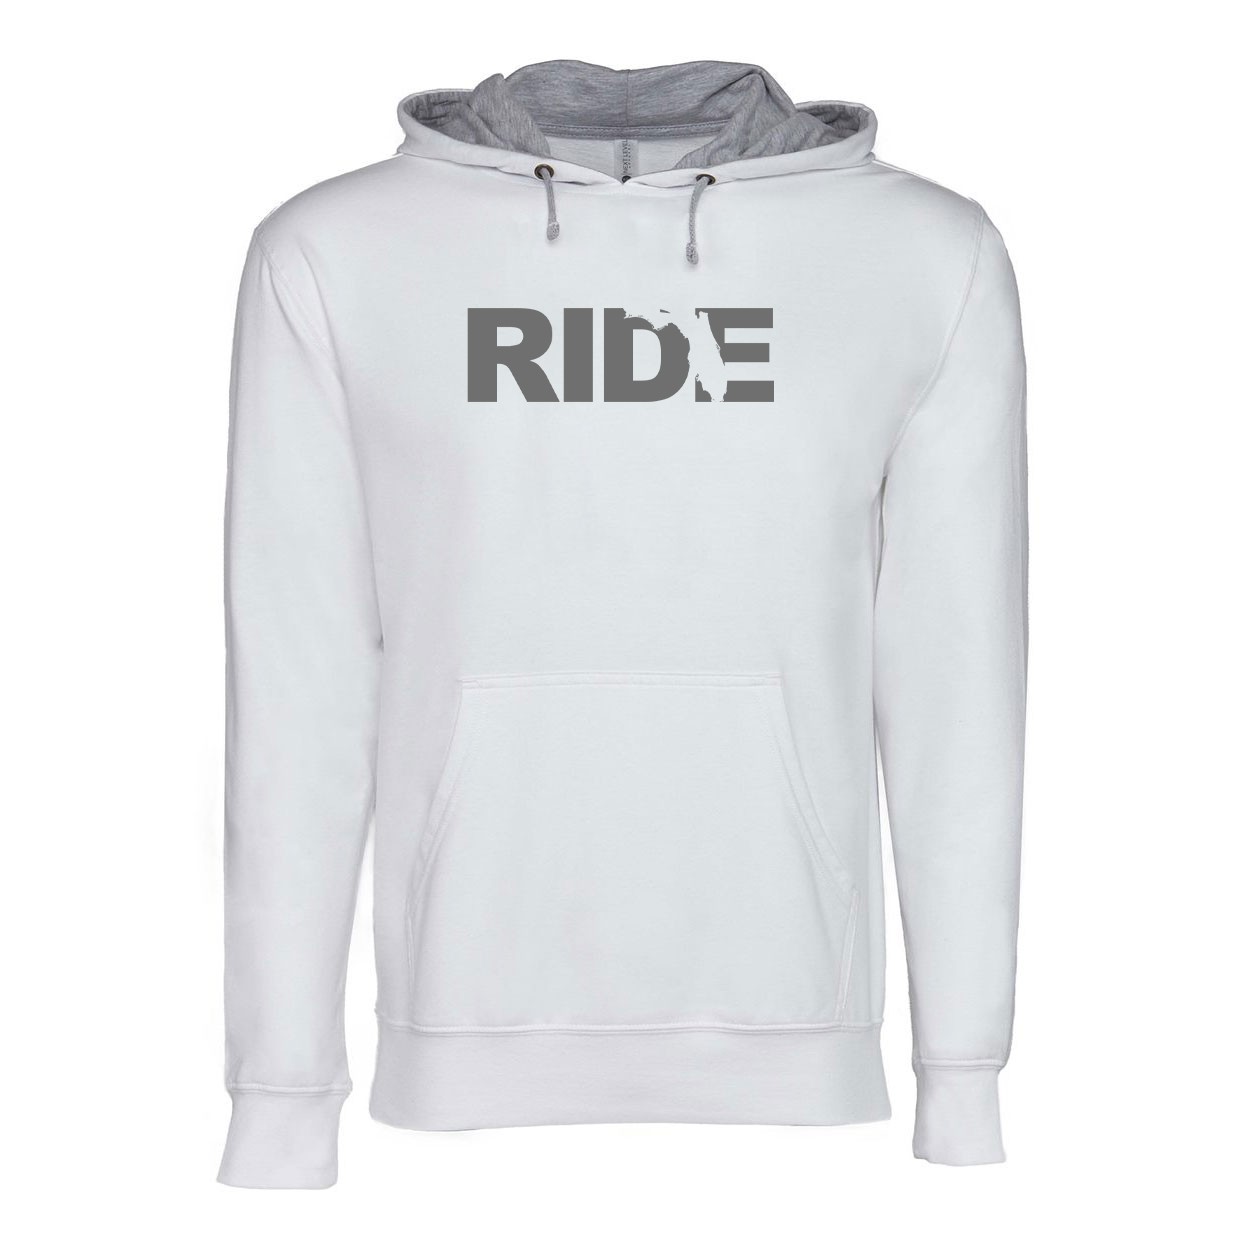 Ride Florida Classic Lightweight Sweatshirt White/Heather Gray (Gray Logo)